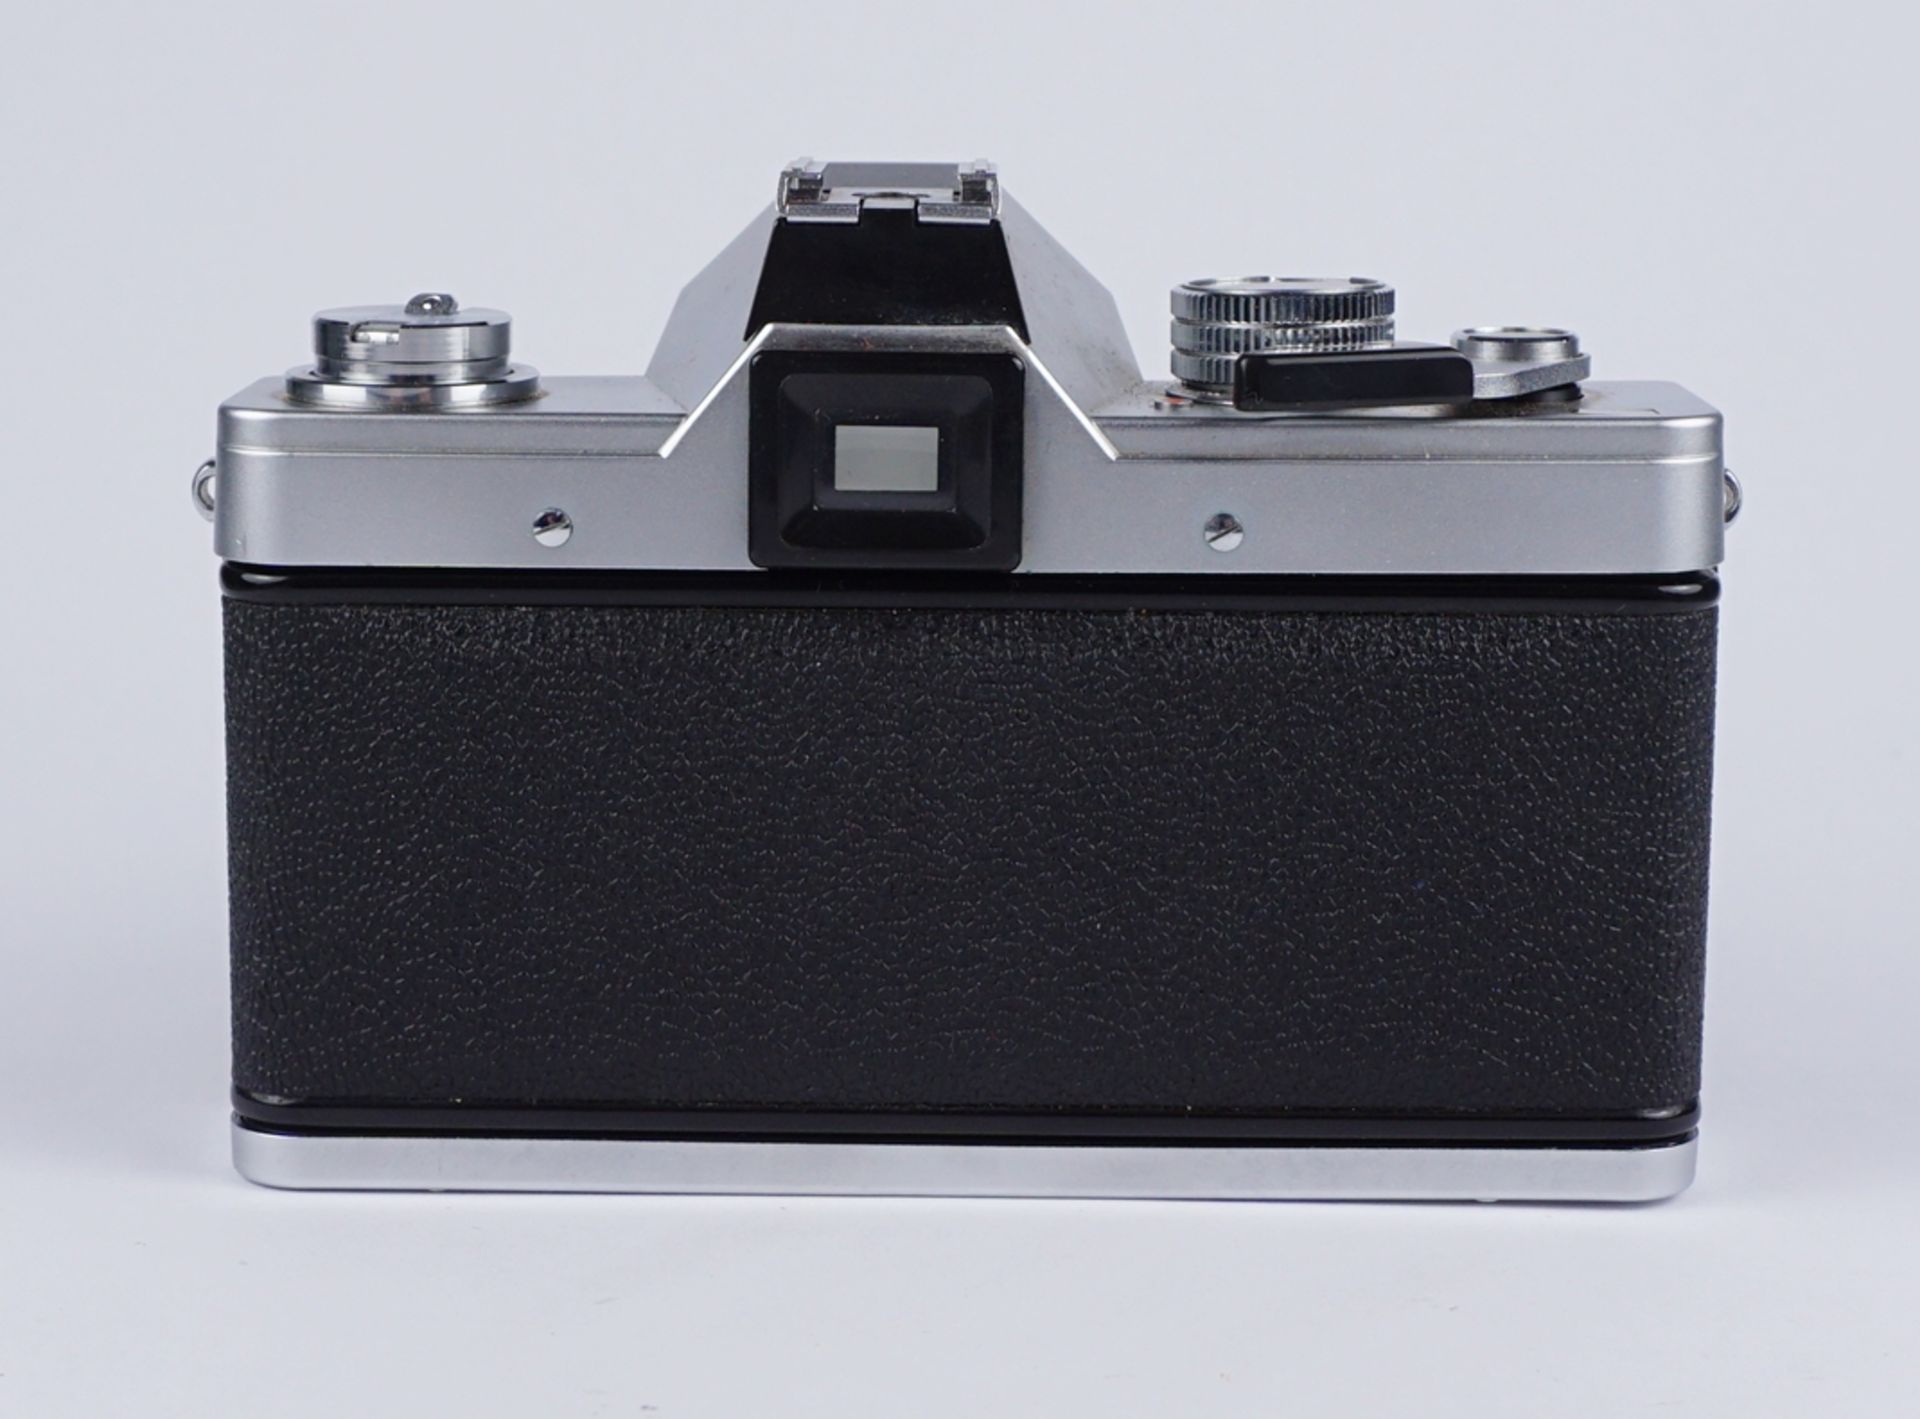 Spiegelreflexkamera Praktica L2, 1970er Jahre, DDR - Image 2 of 3